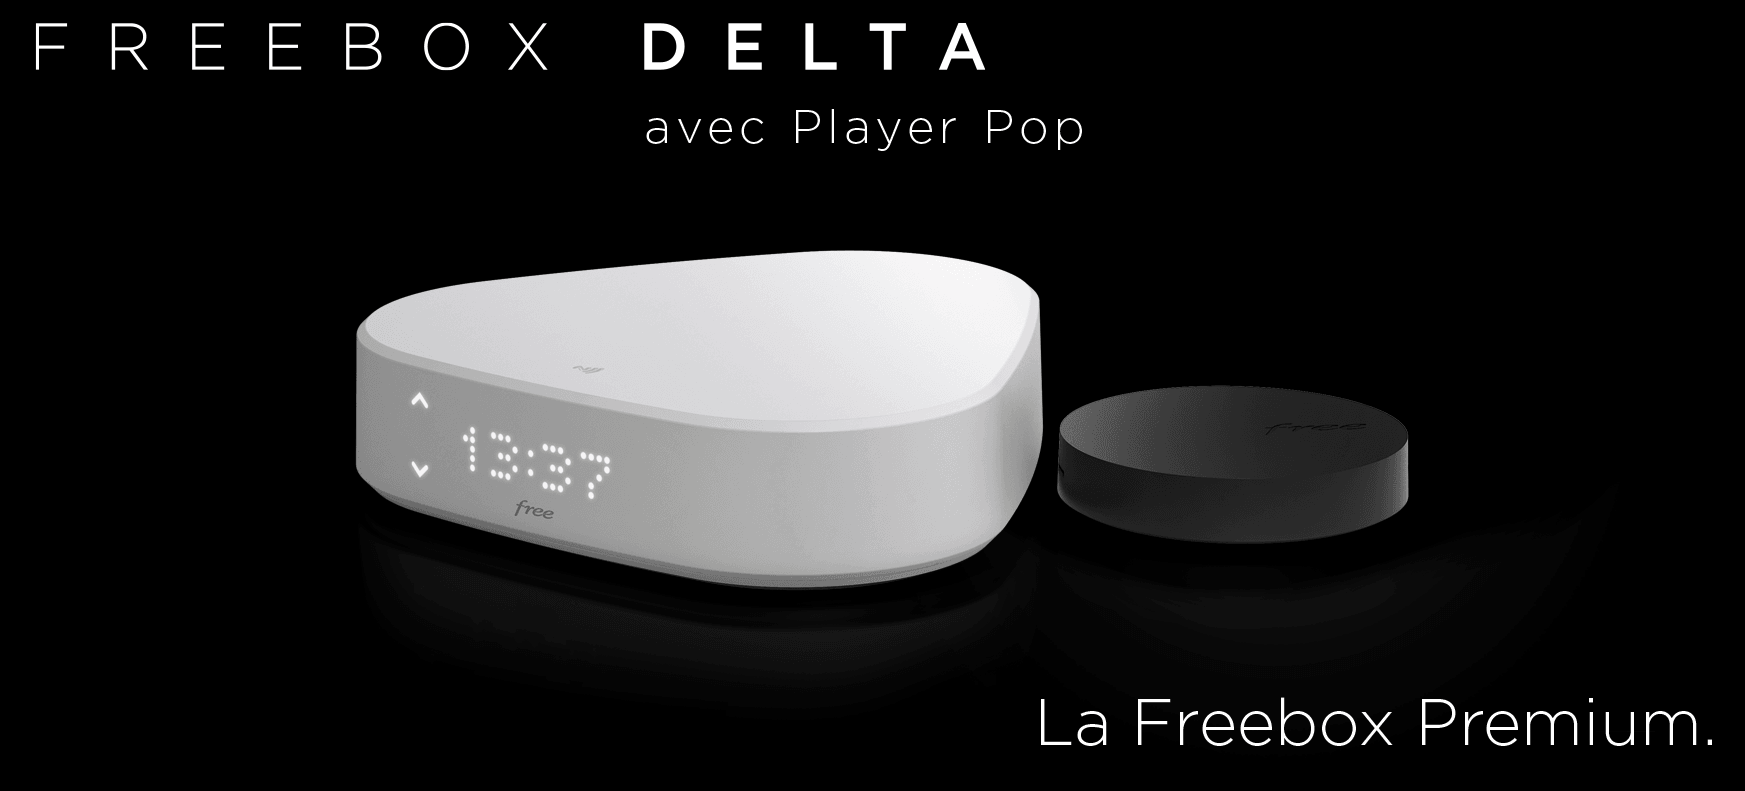 La Freebox Delta de Free